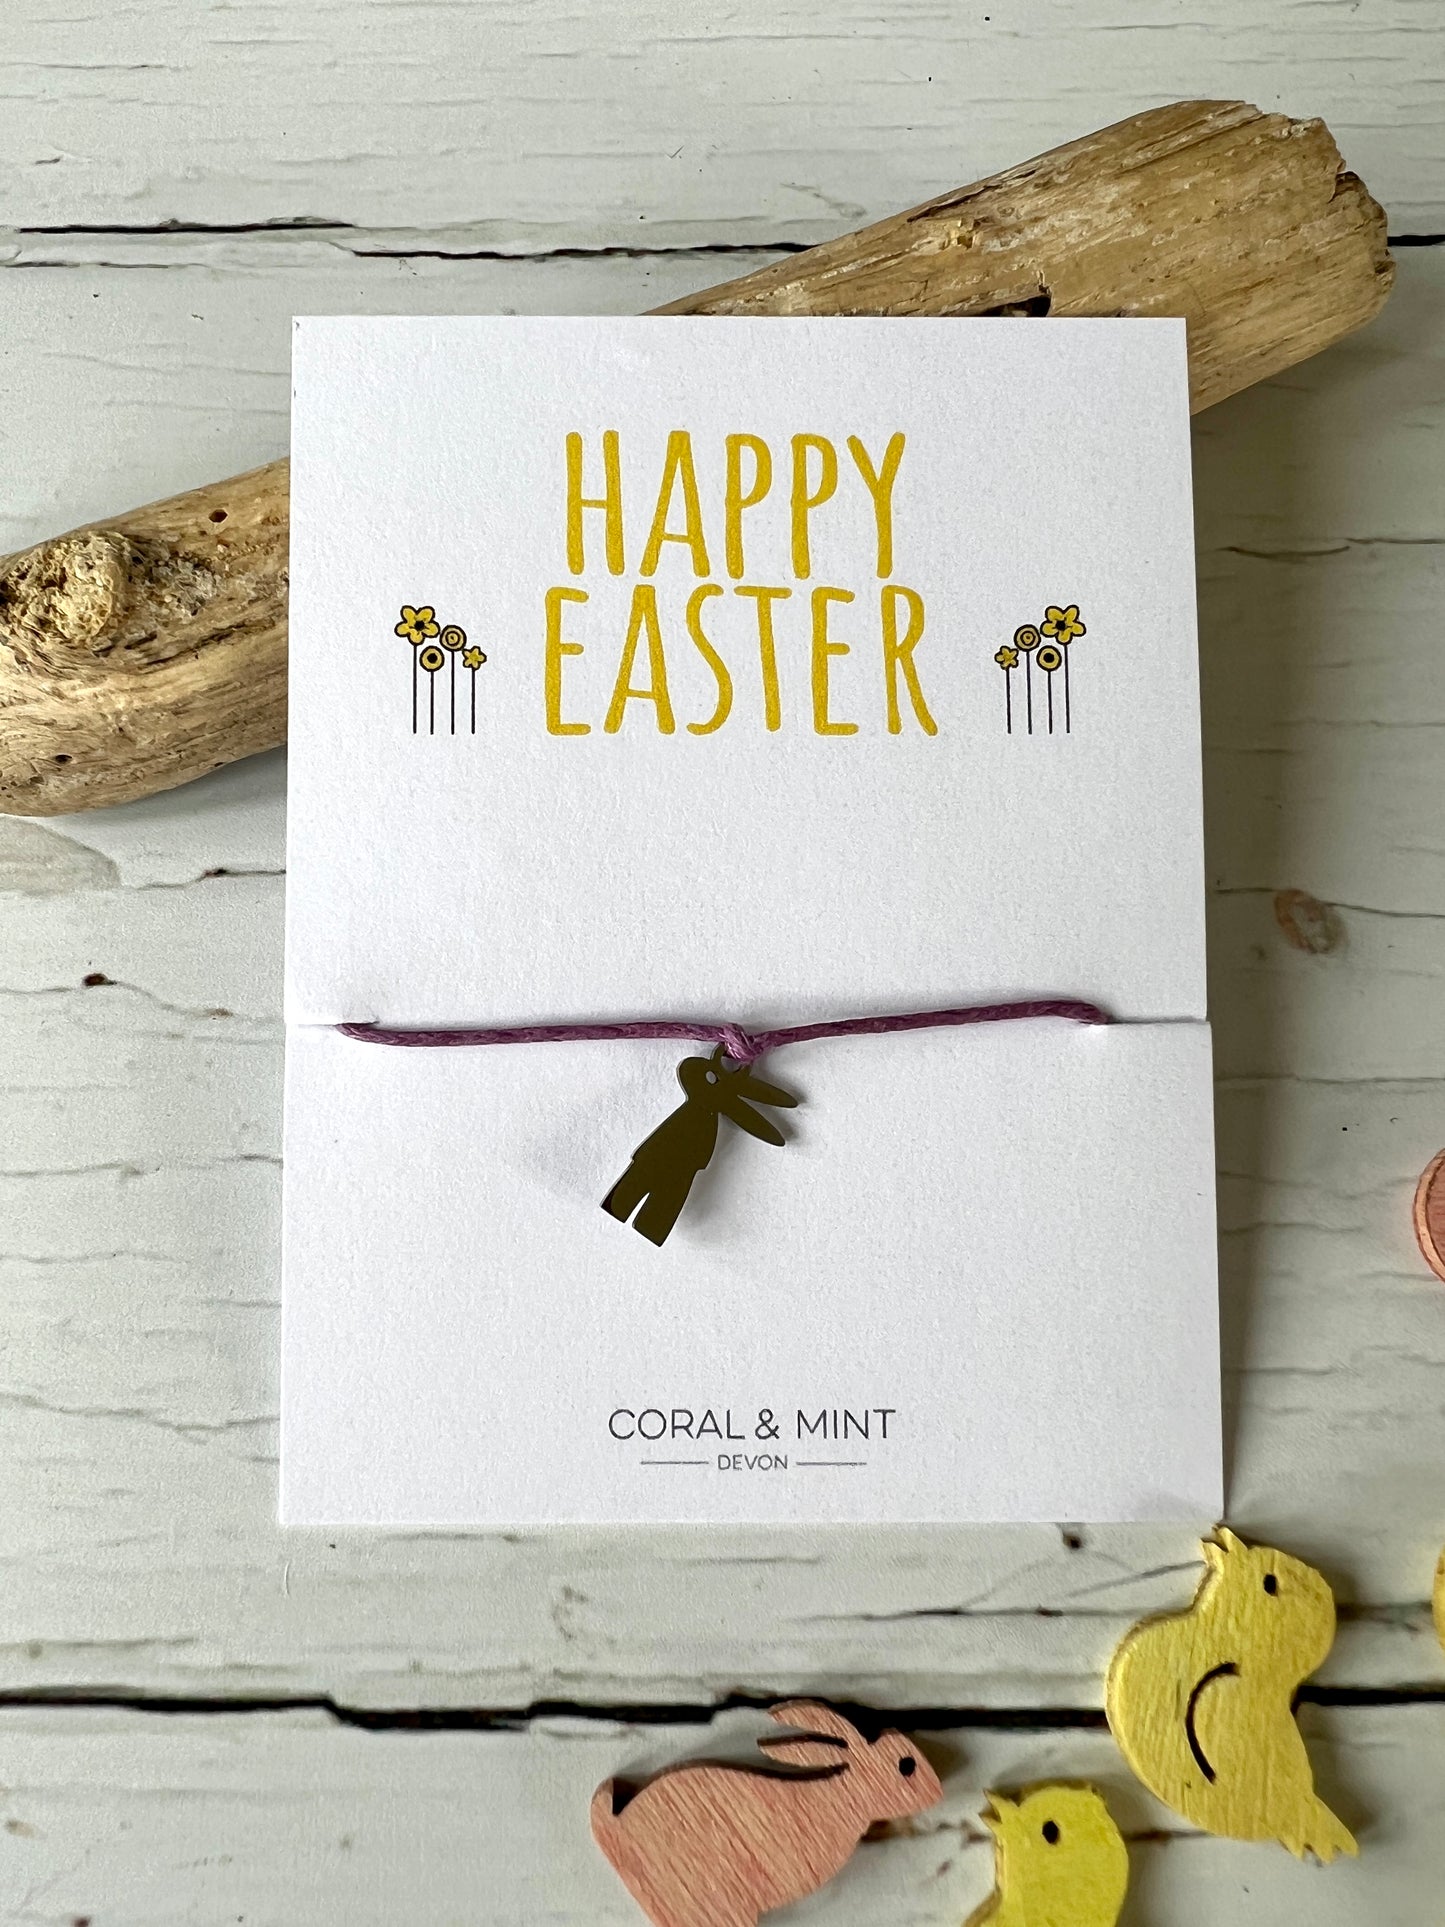 Hoppy Easter String Bracelet Bangle Anklet with Bunny/Rabbit Charm